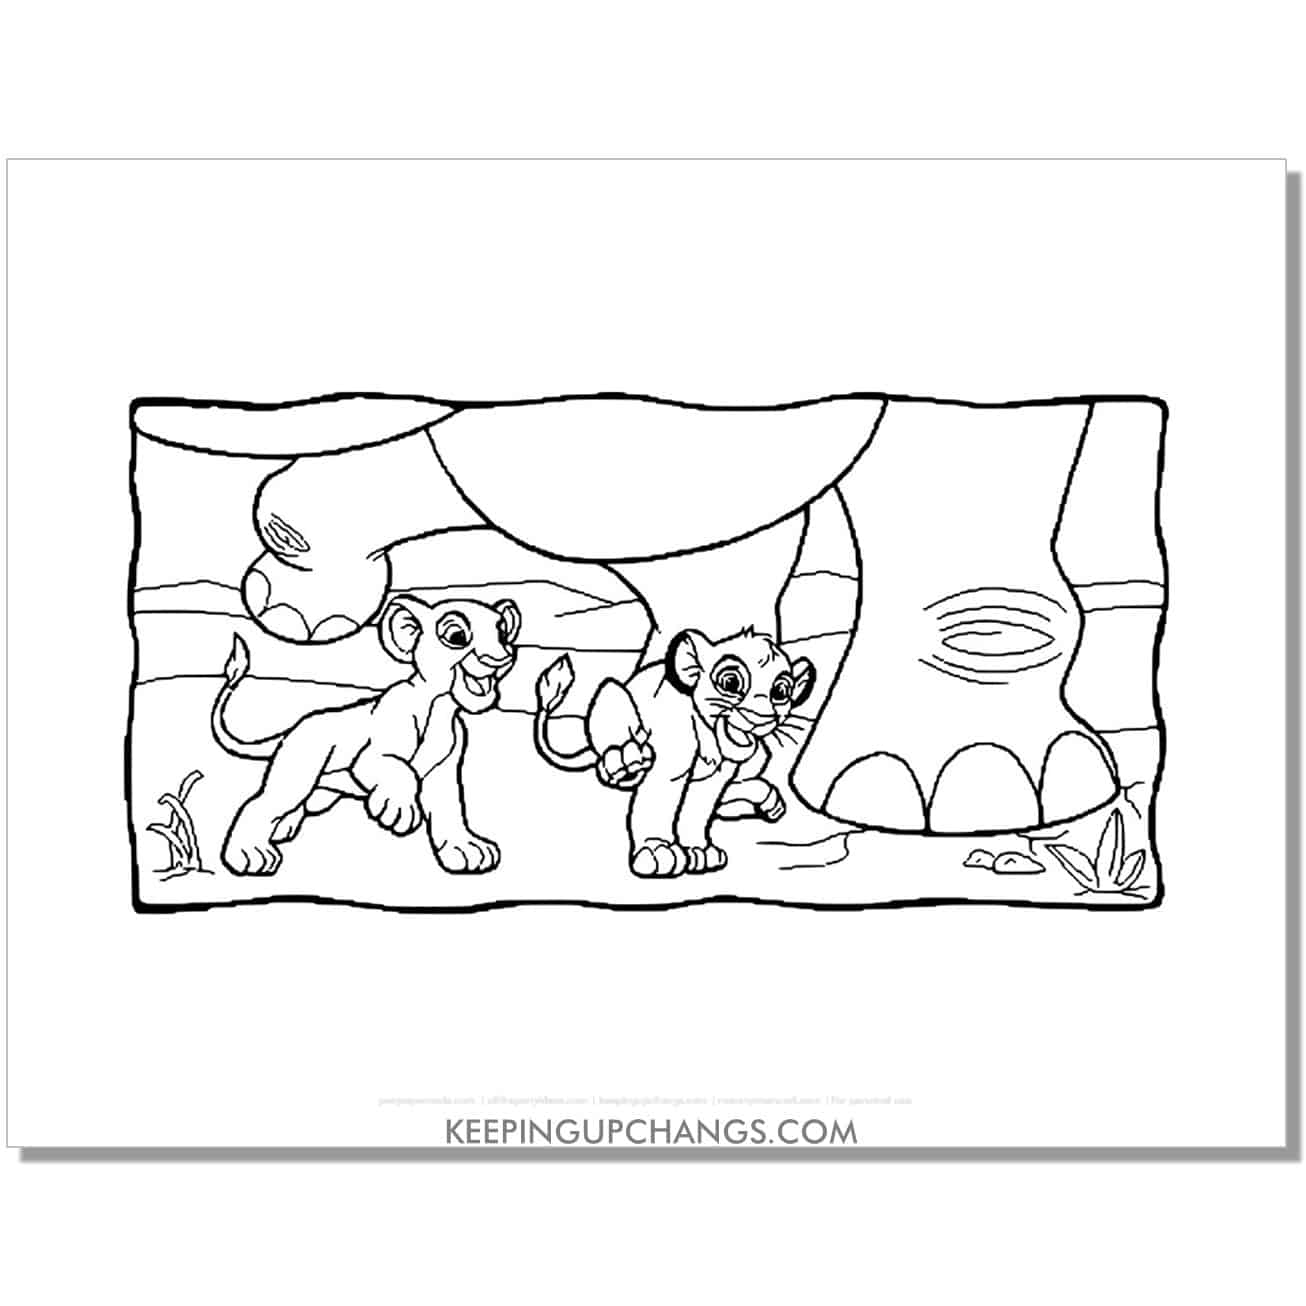 simba and nala running alongside elephant lion king coloring page, sheet.